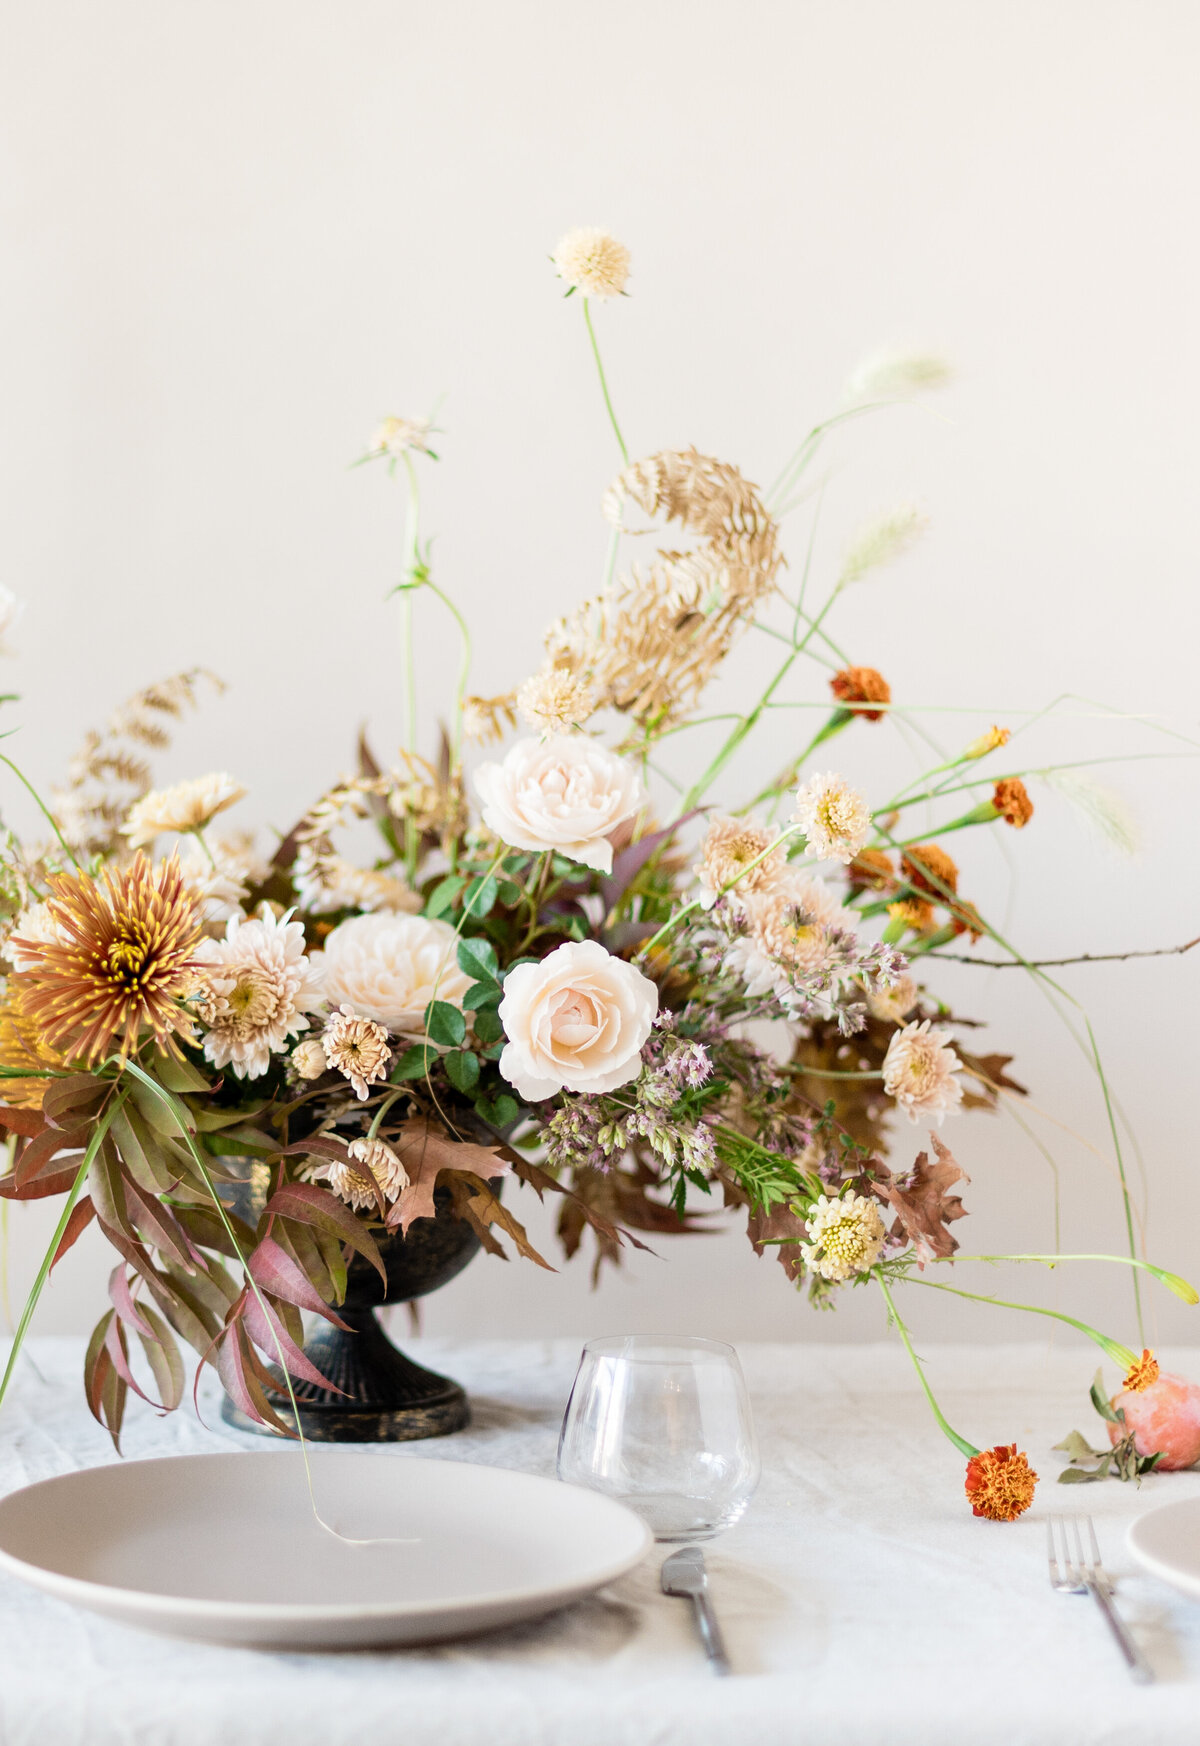 Atelier-Carmel-Wedding-Florist-GALLERY-Centerpieces-3